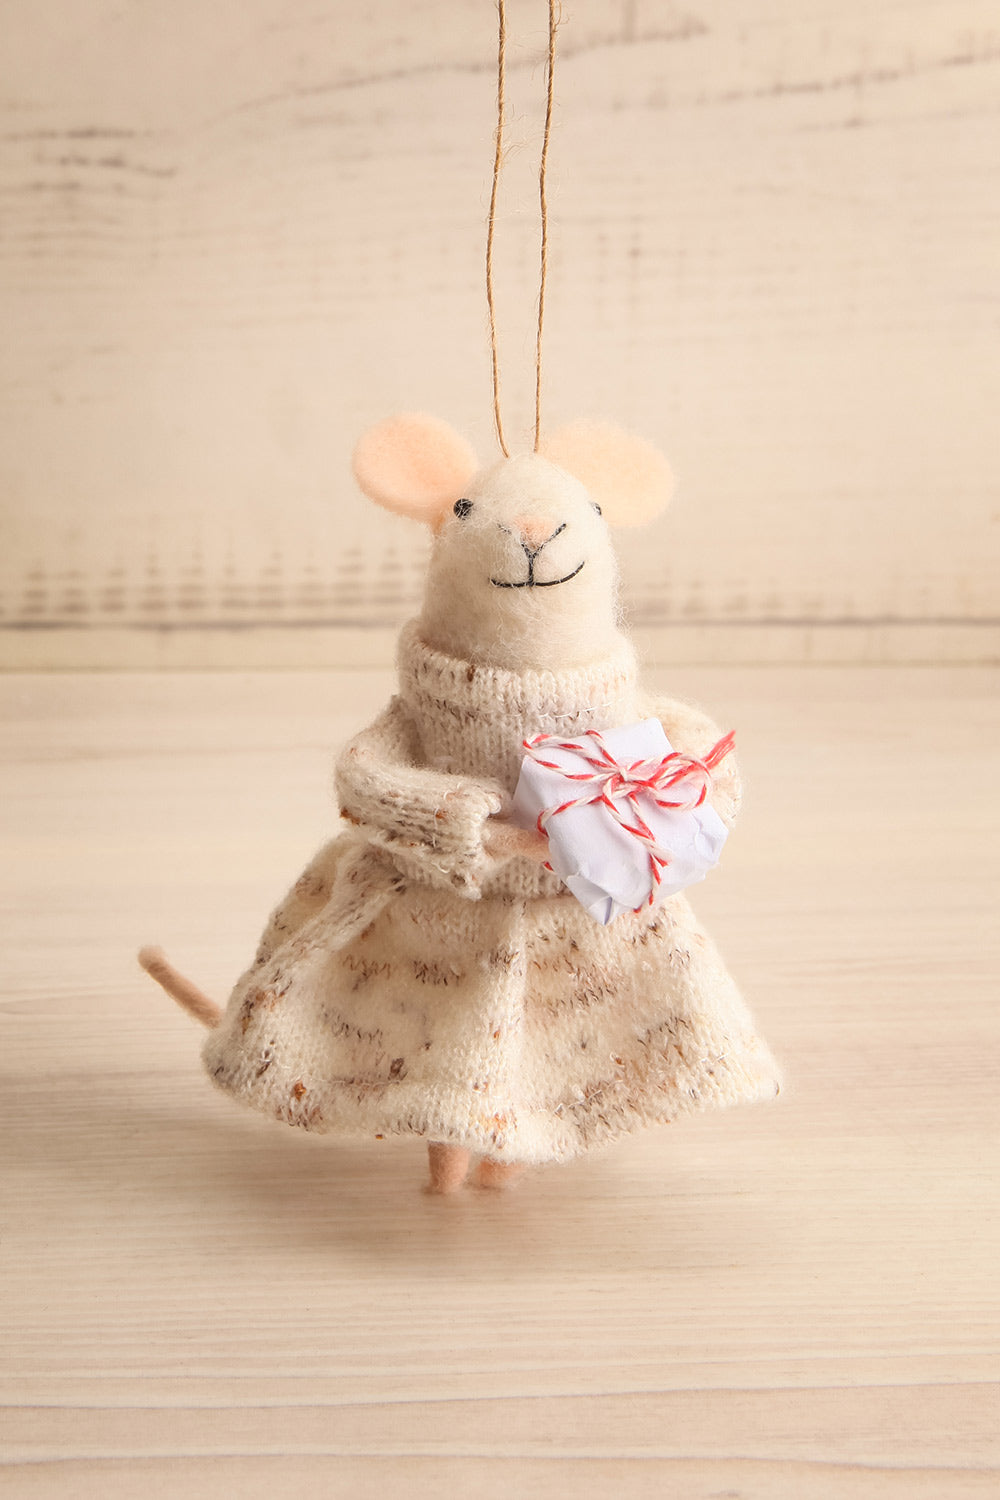 Gifting Mouse Holiday Ornament | Maison garçonne grace